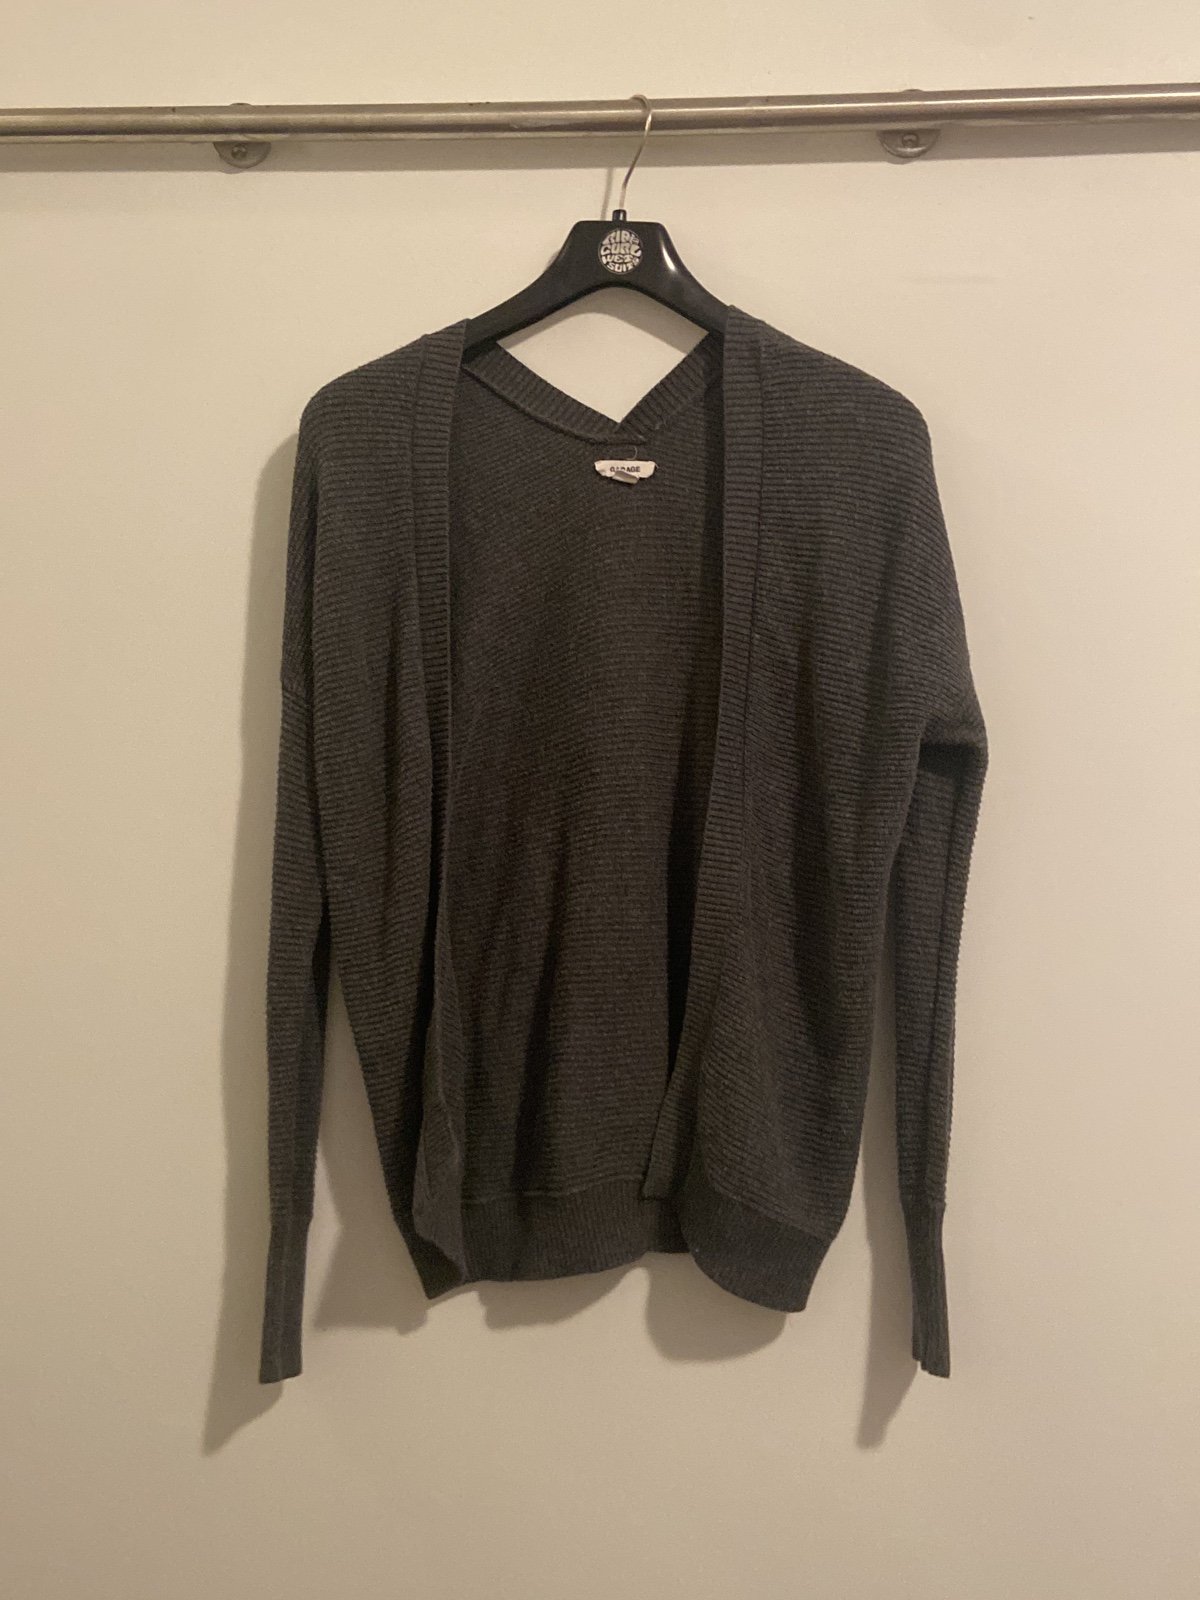 save up to 70% Garage cardigan sweater xs ioDzNzB8s New